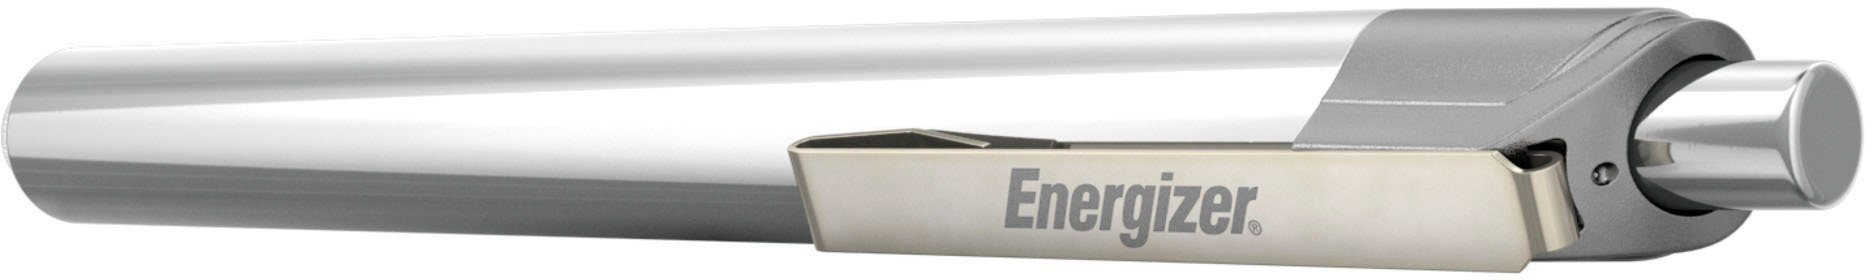 Energizer Penlight Taschenlampe LED